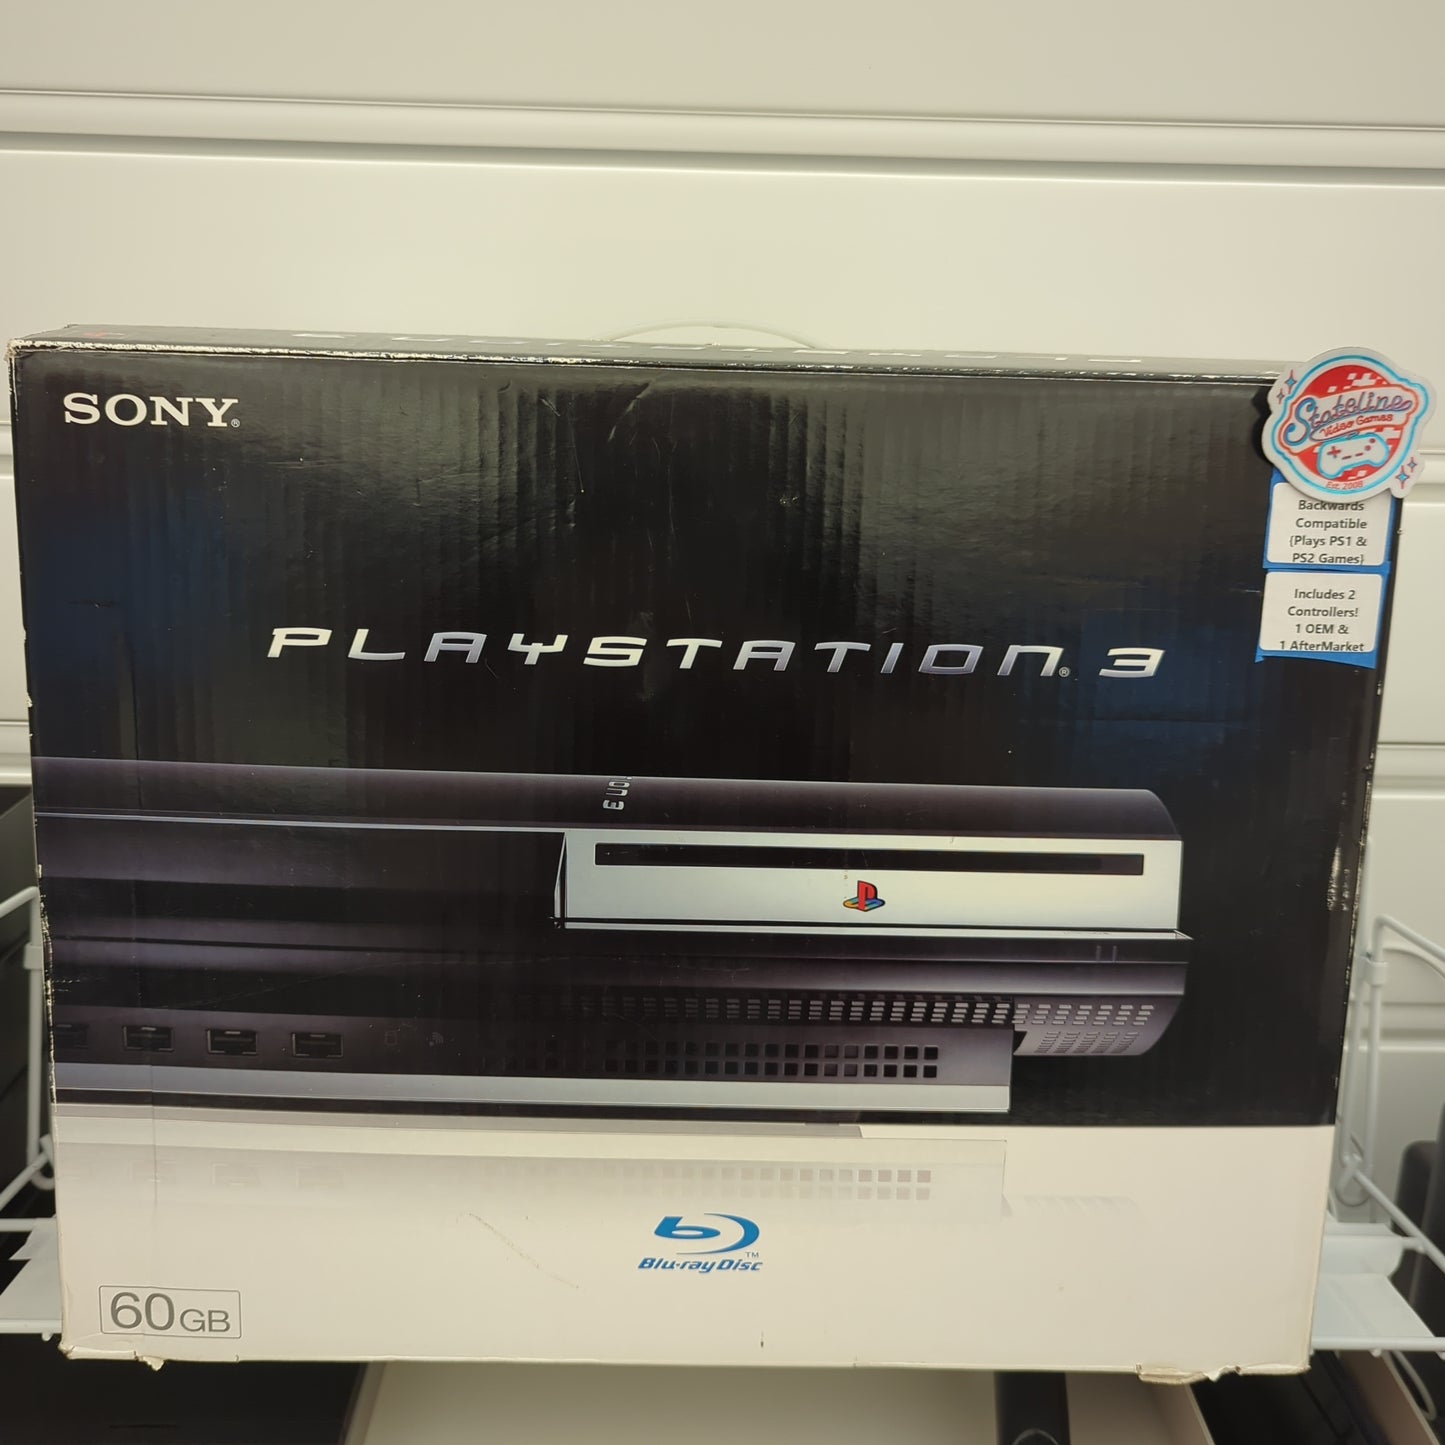 Playstation 3 Console - Playstation 3